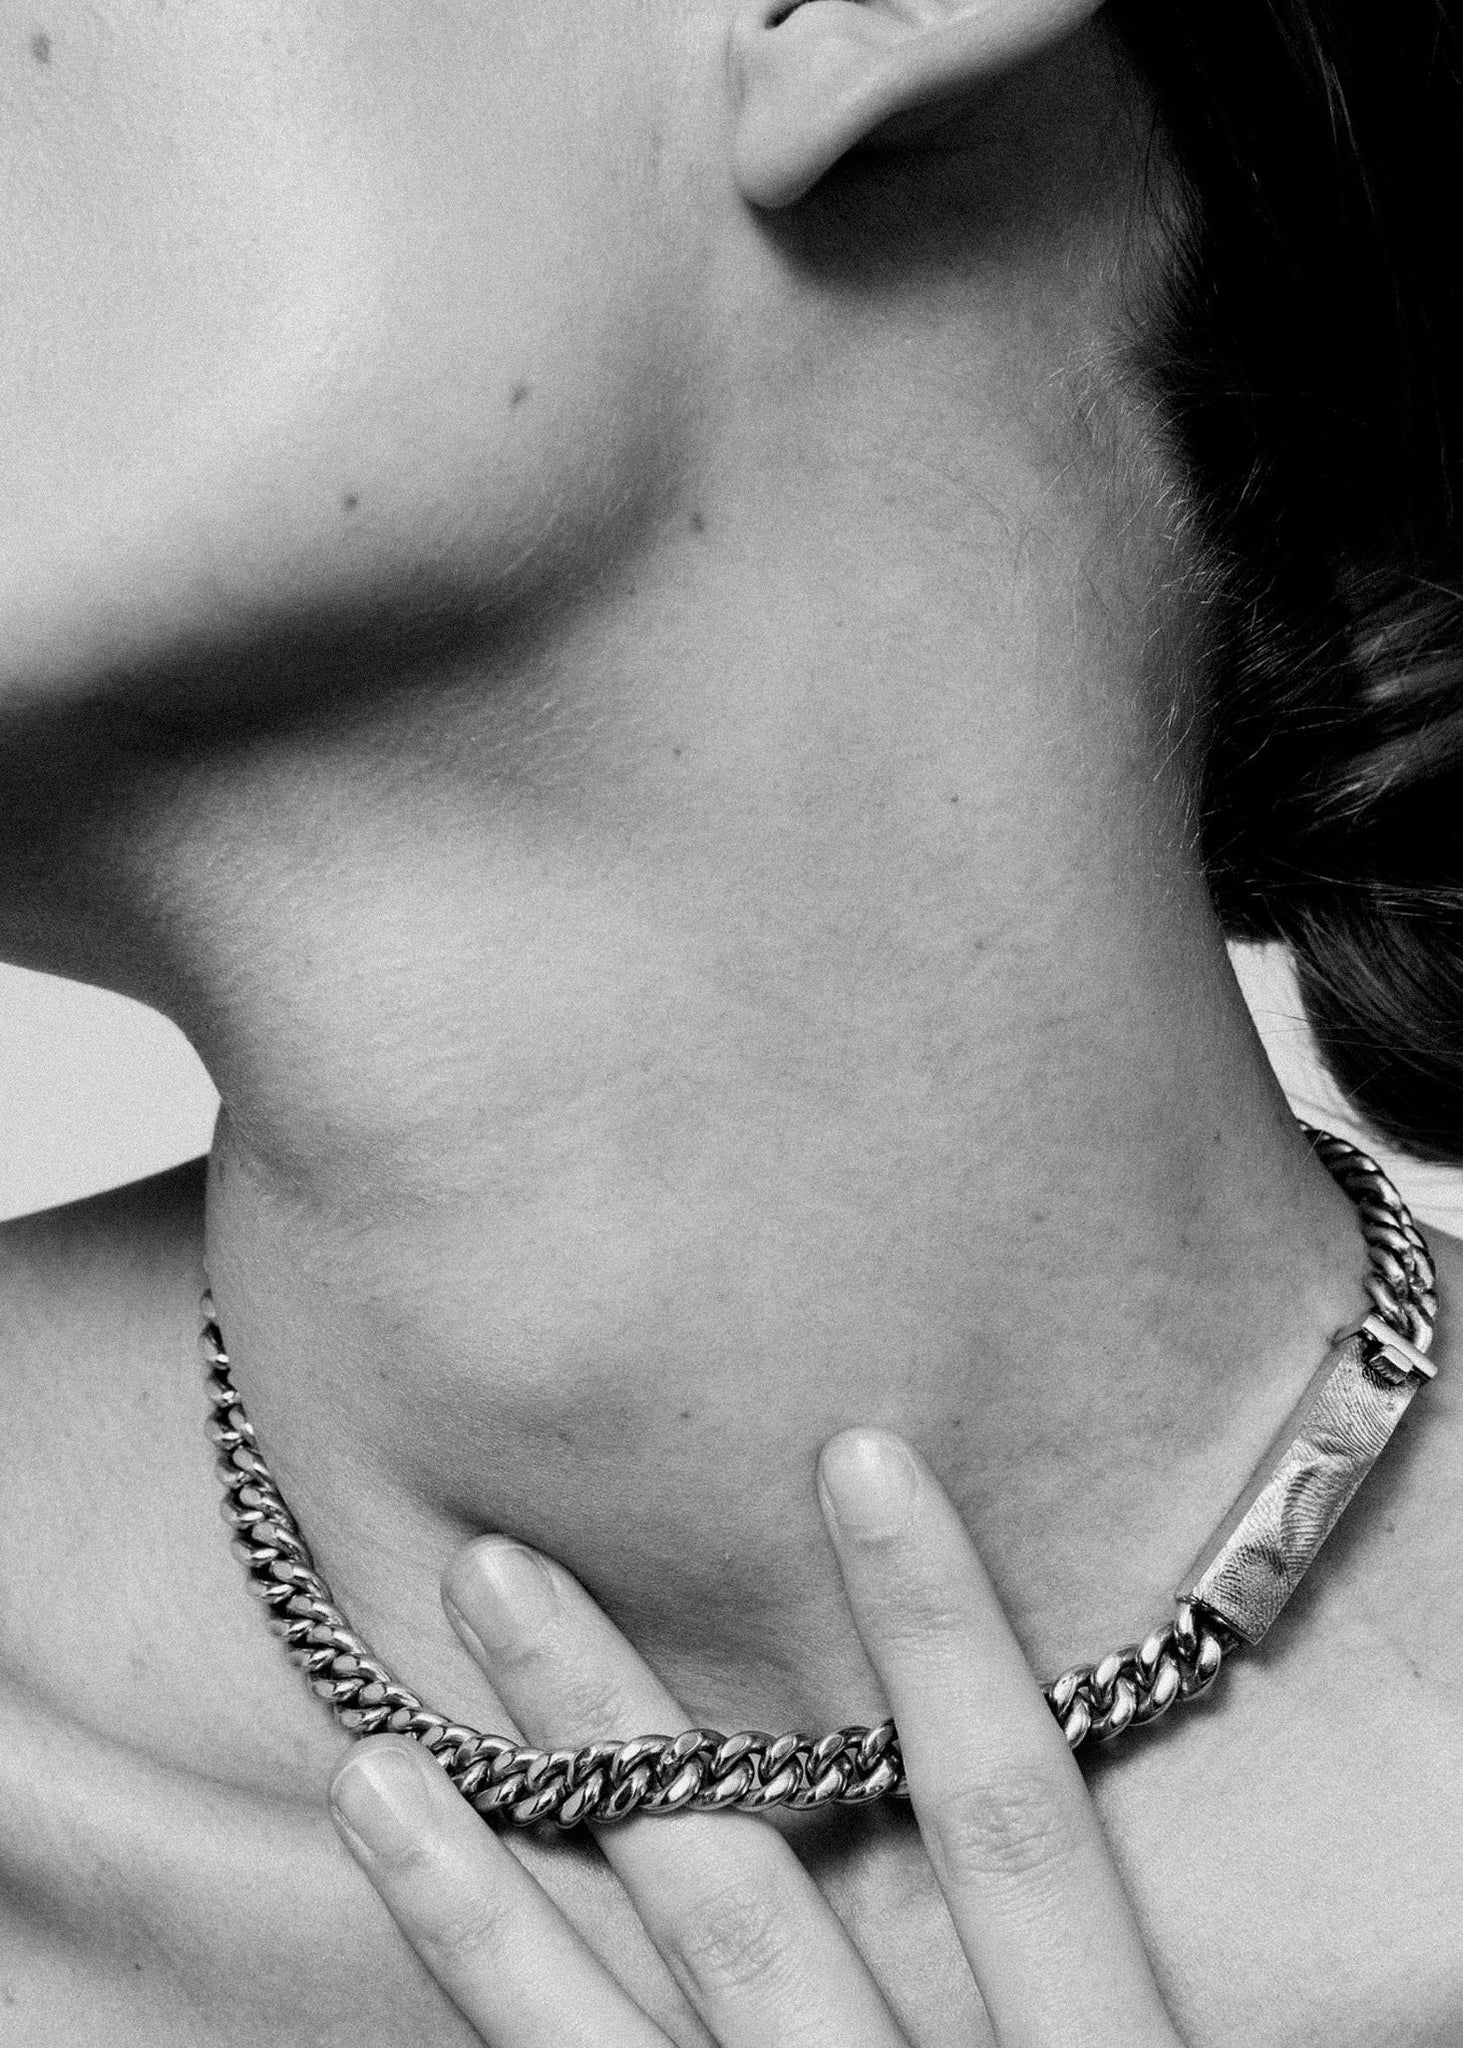 Molded Chain Necklace - Necklaces - Cornelia Webb - 1